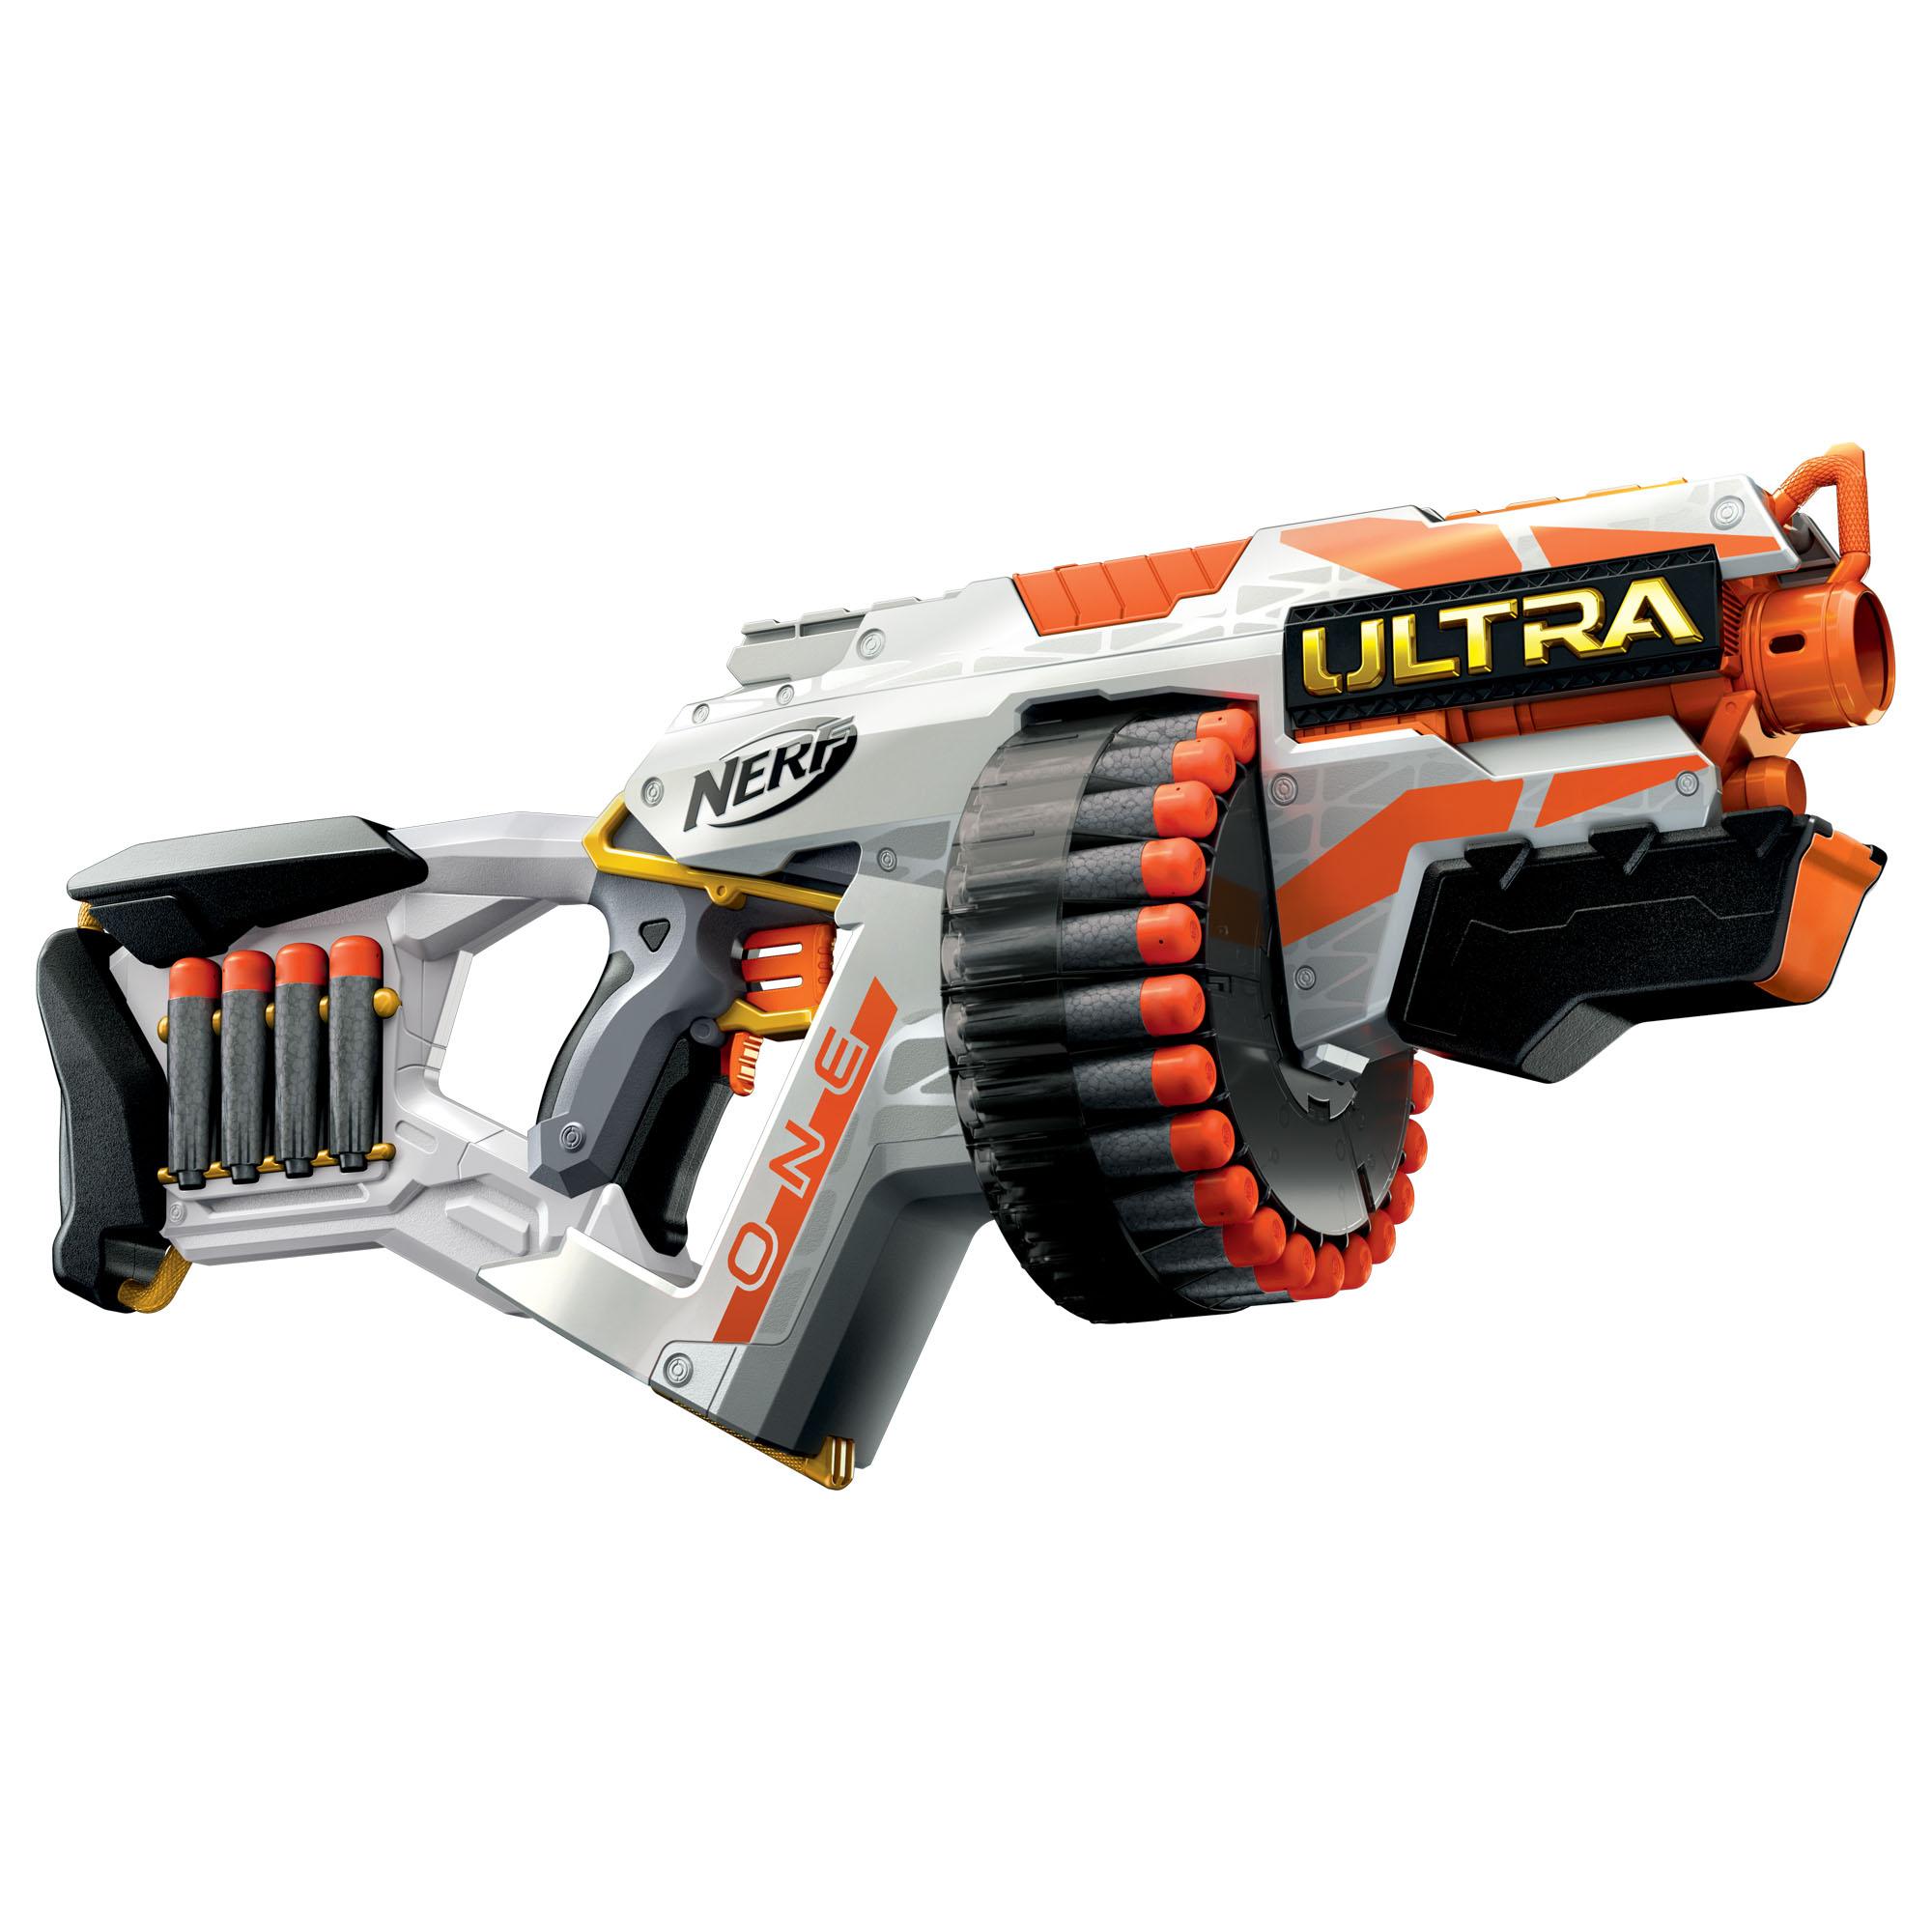 Lanzador Nerf Ultra One